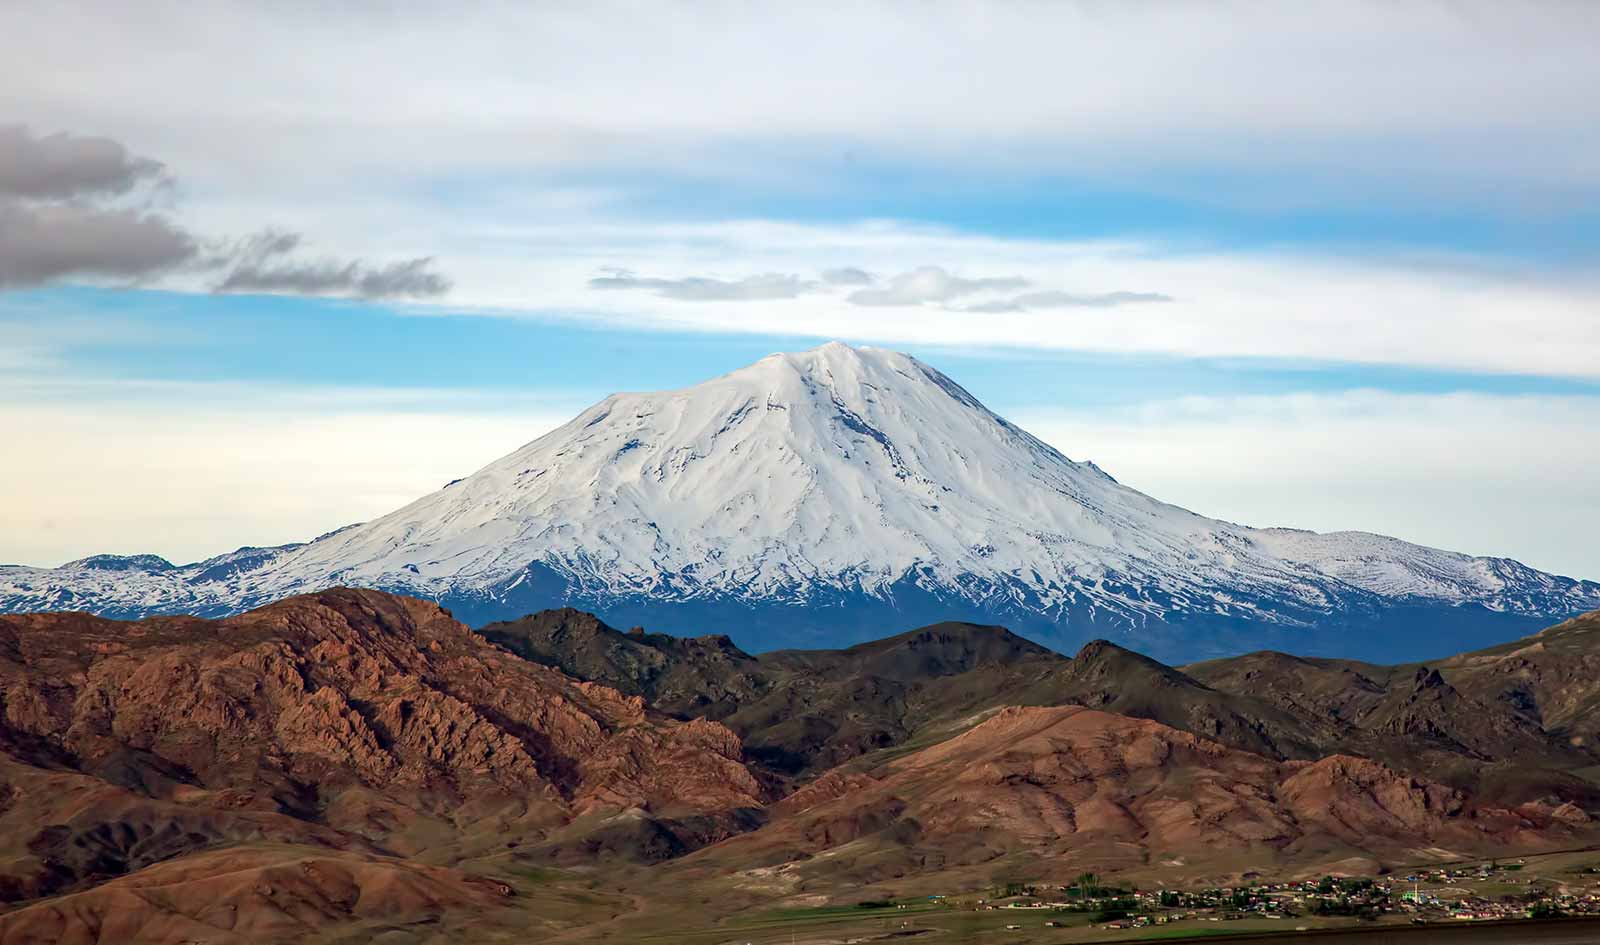 Mount Ararat (Agri Dagi)